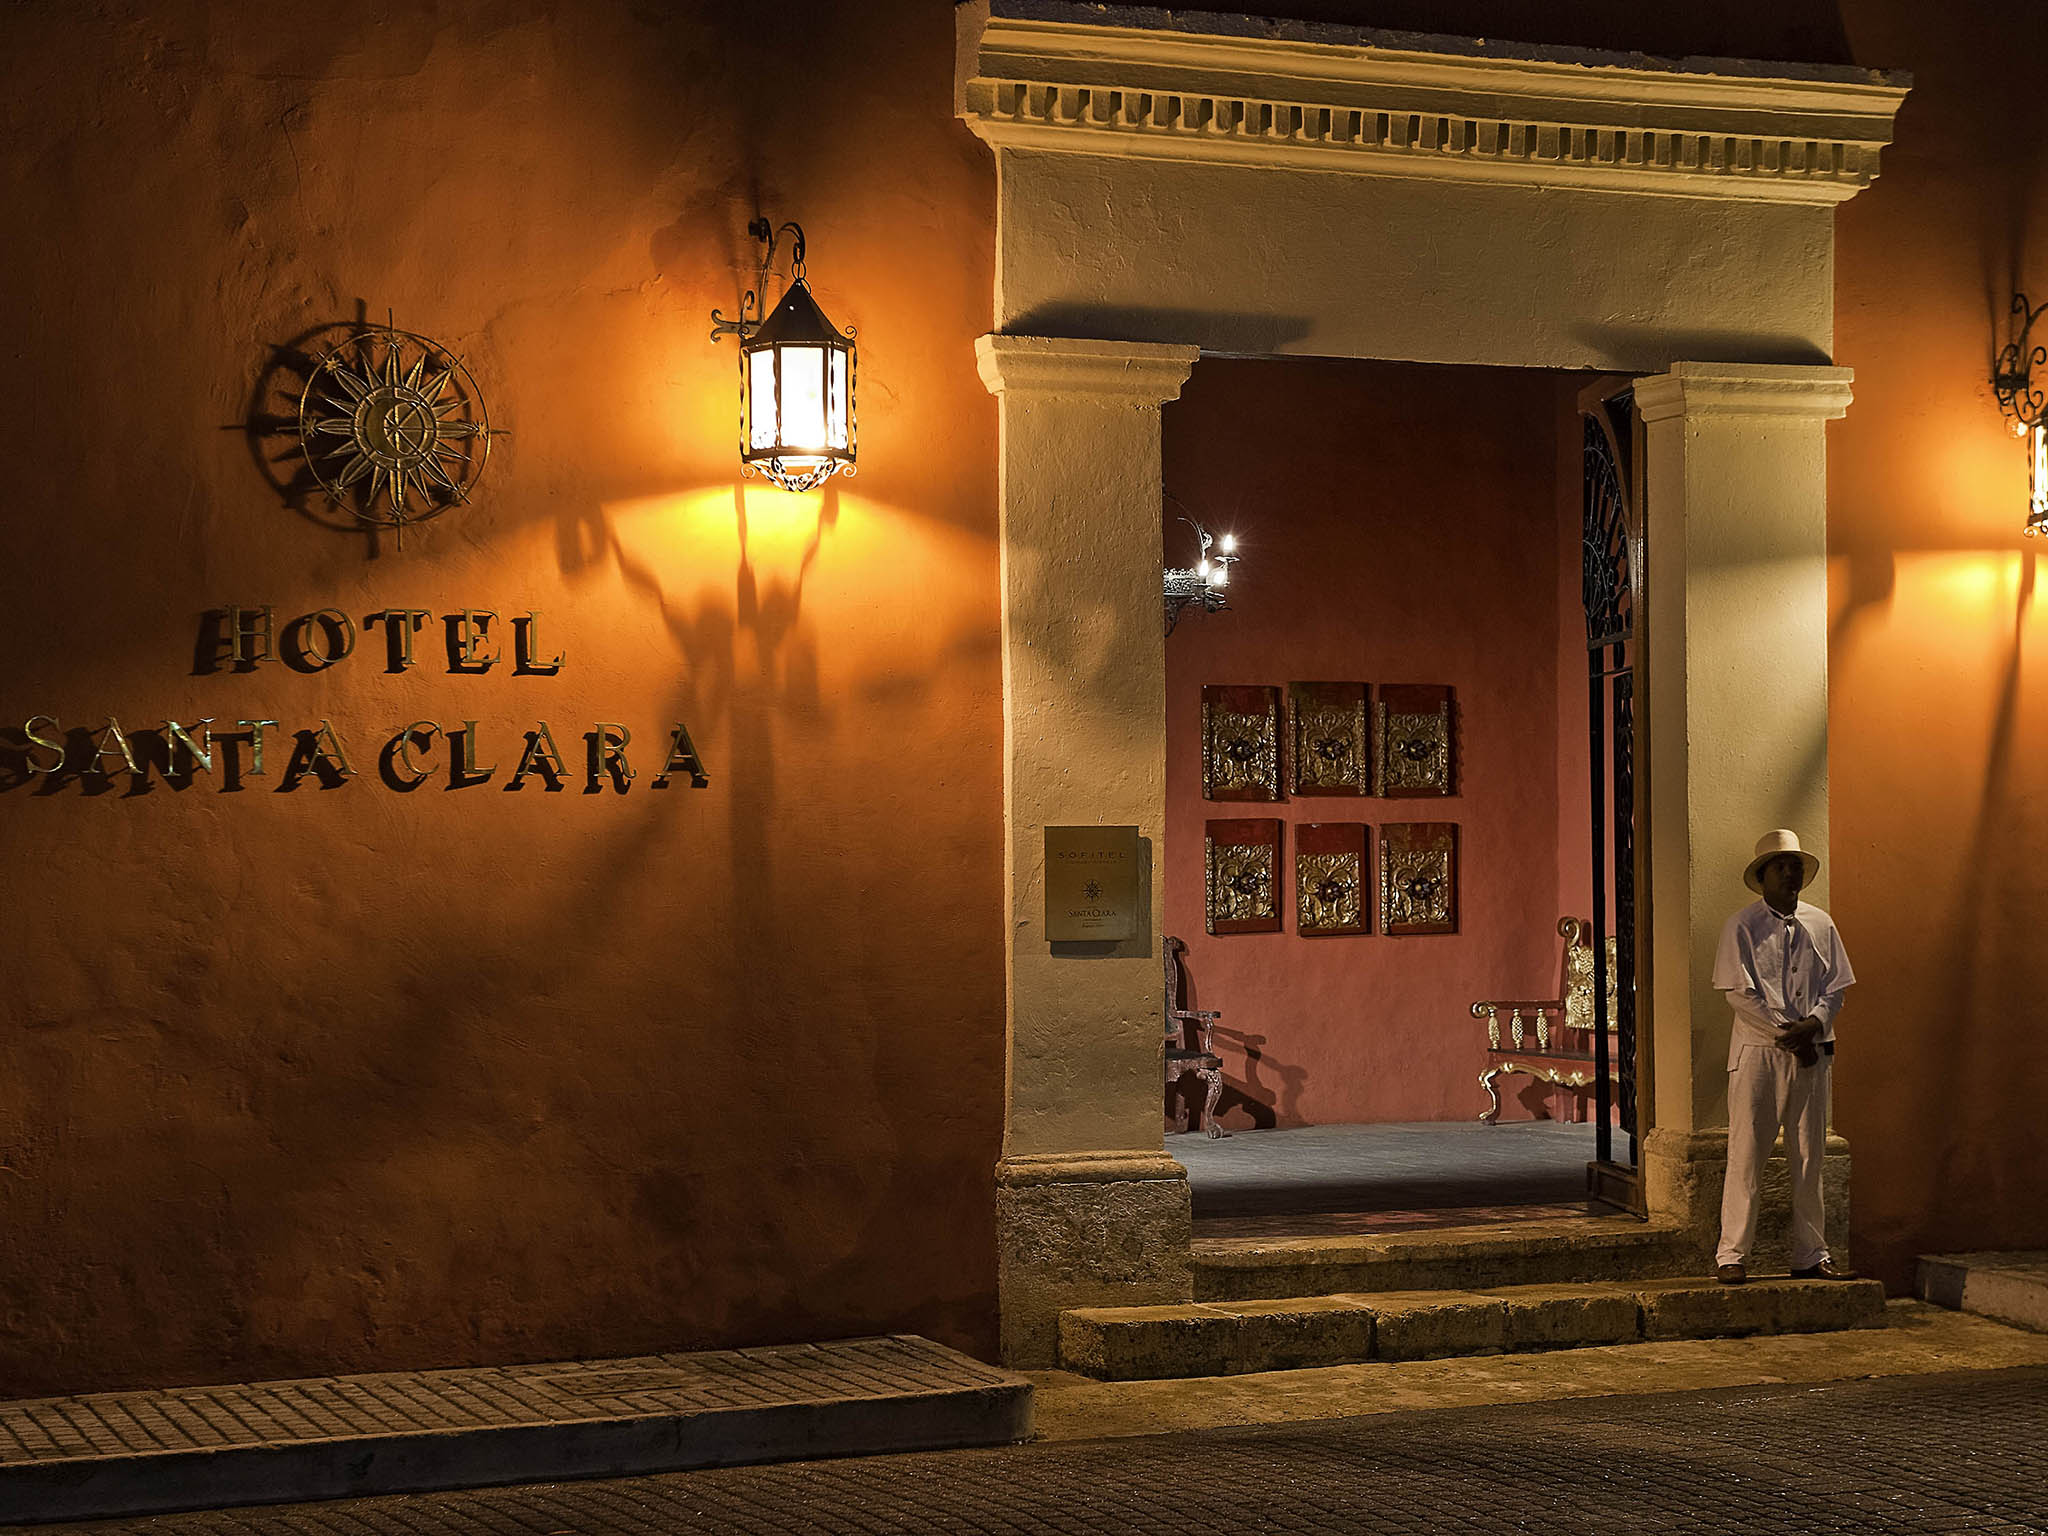 Hotel Sofitel Cartagena Santa Clara